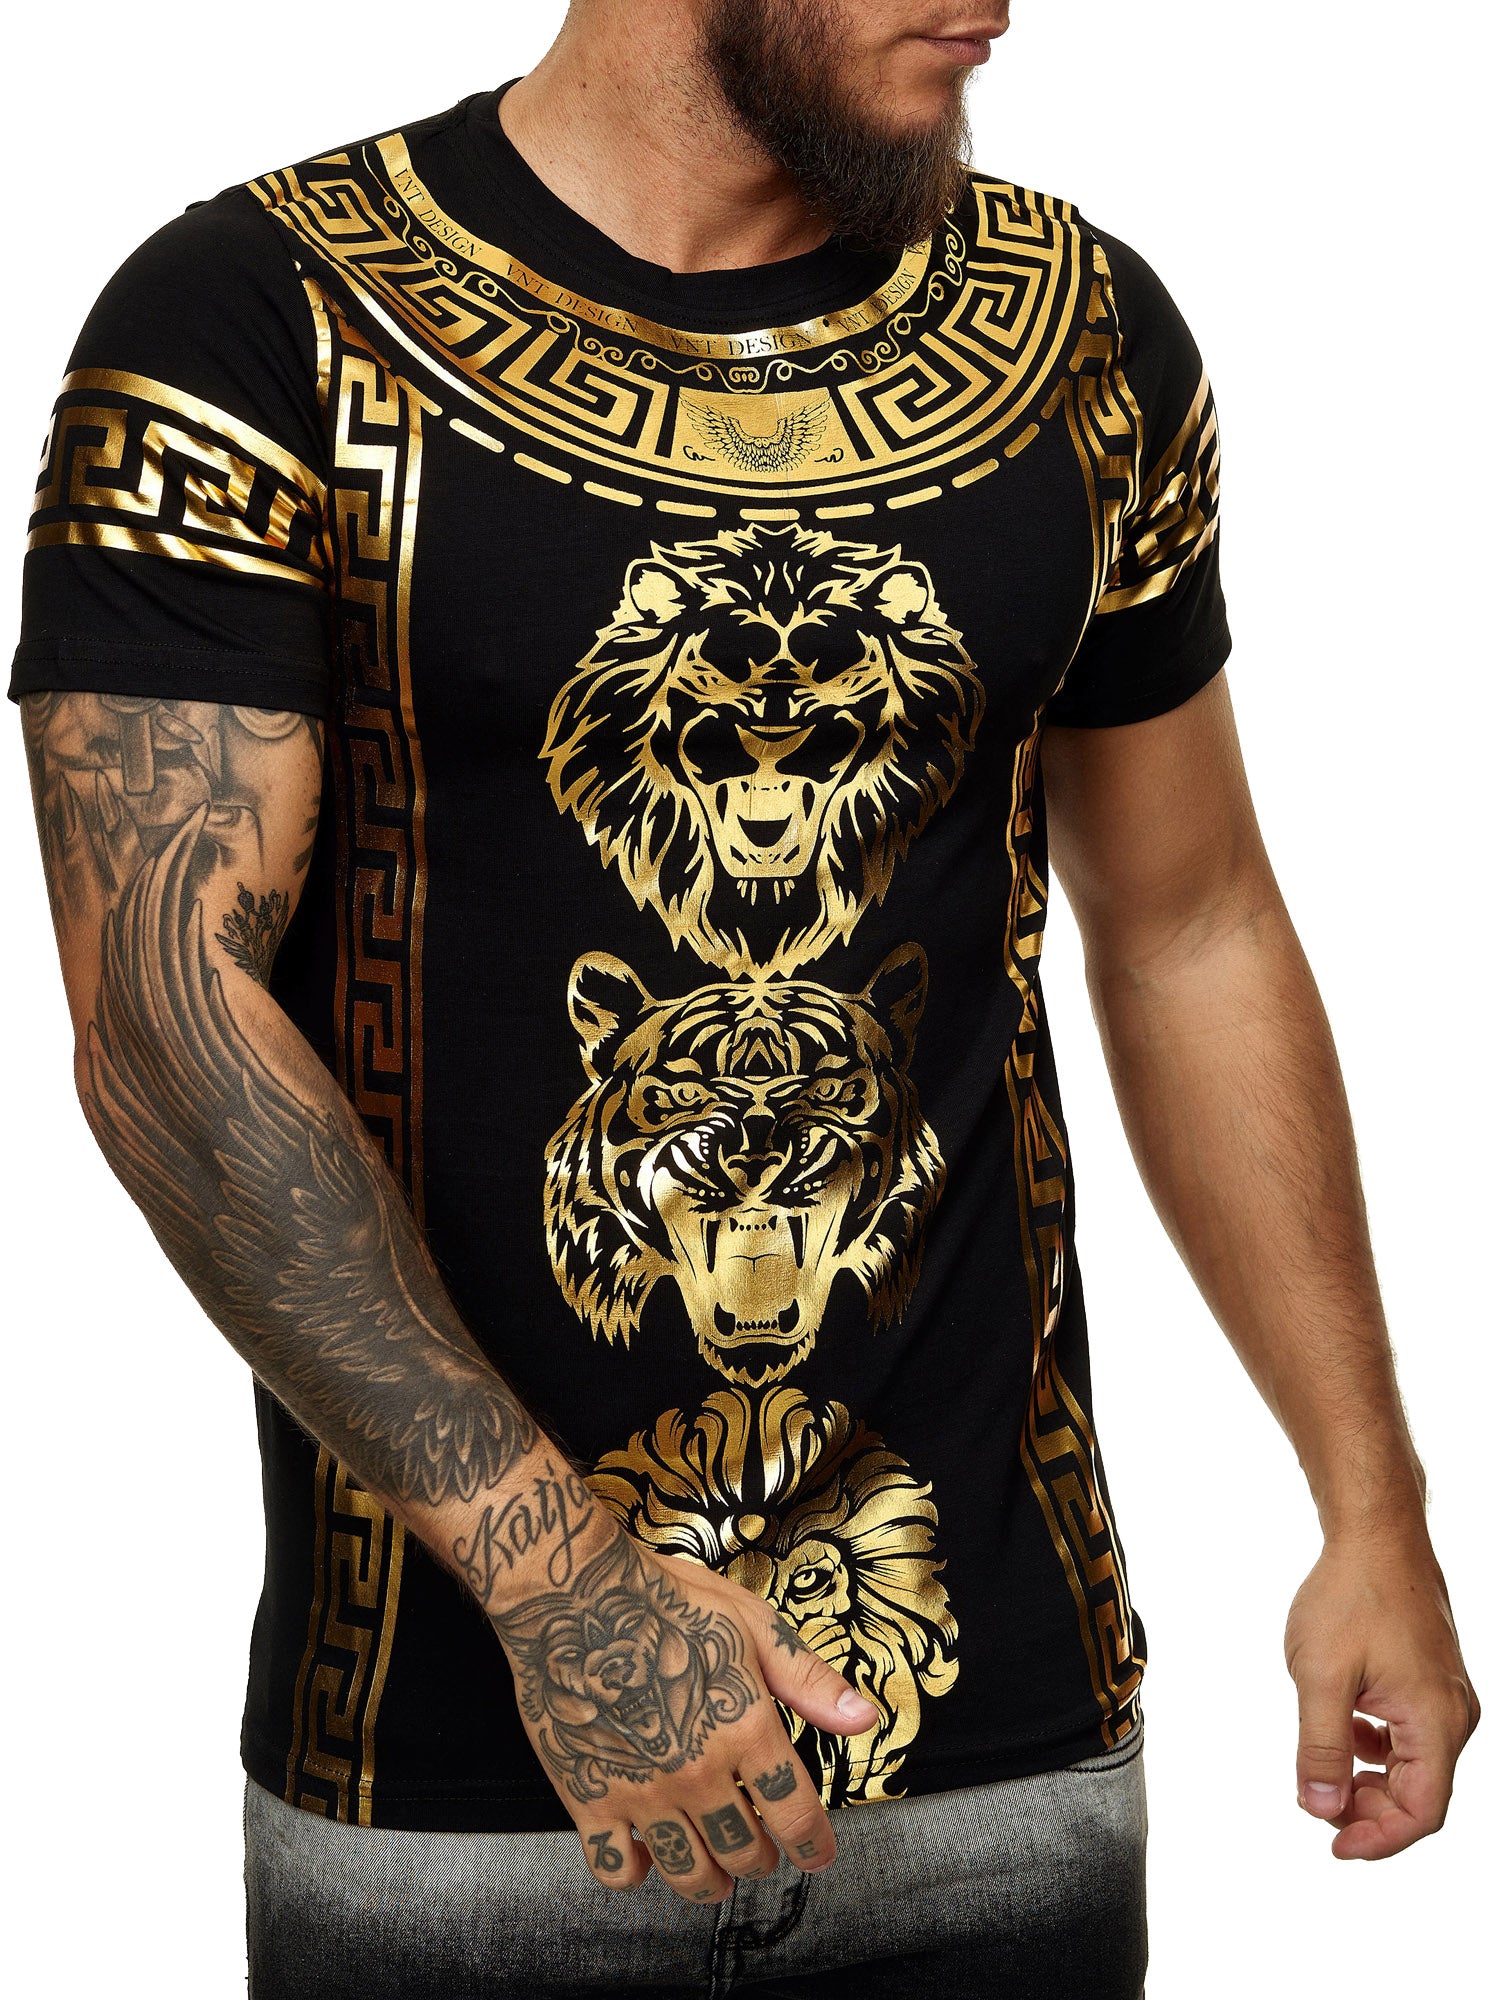 Falion Graphic T-Shirt - Black Gold X52A FASH STOP